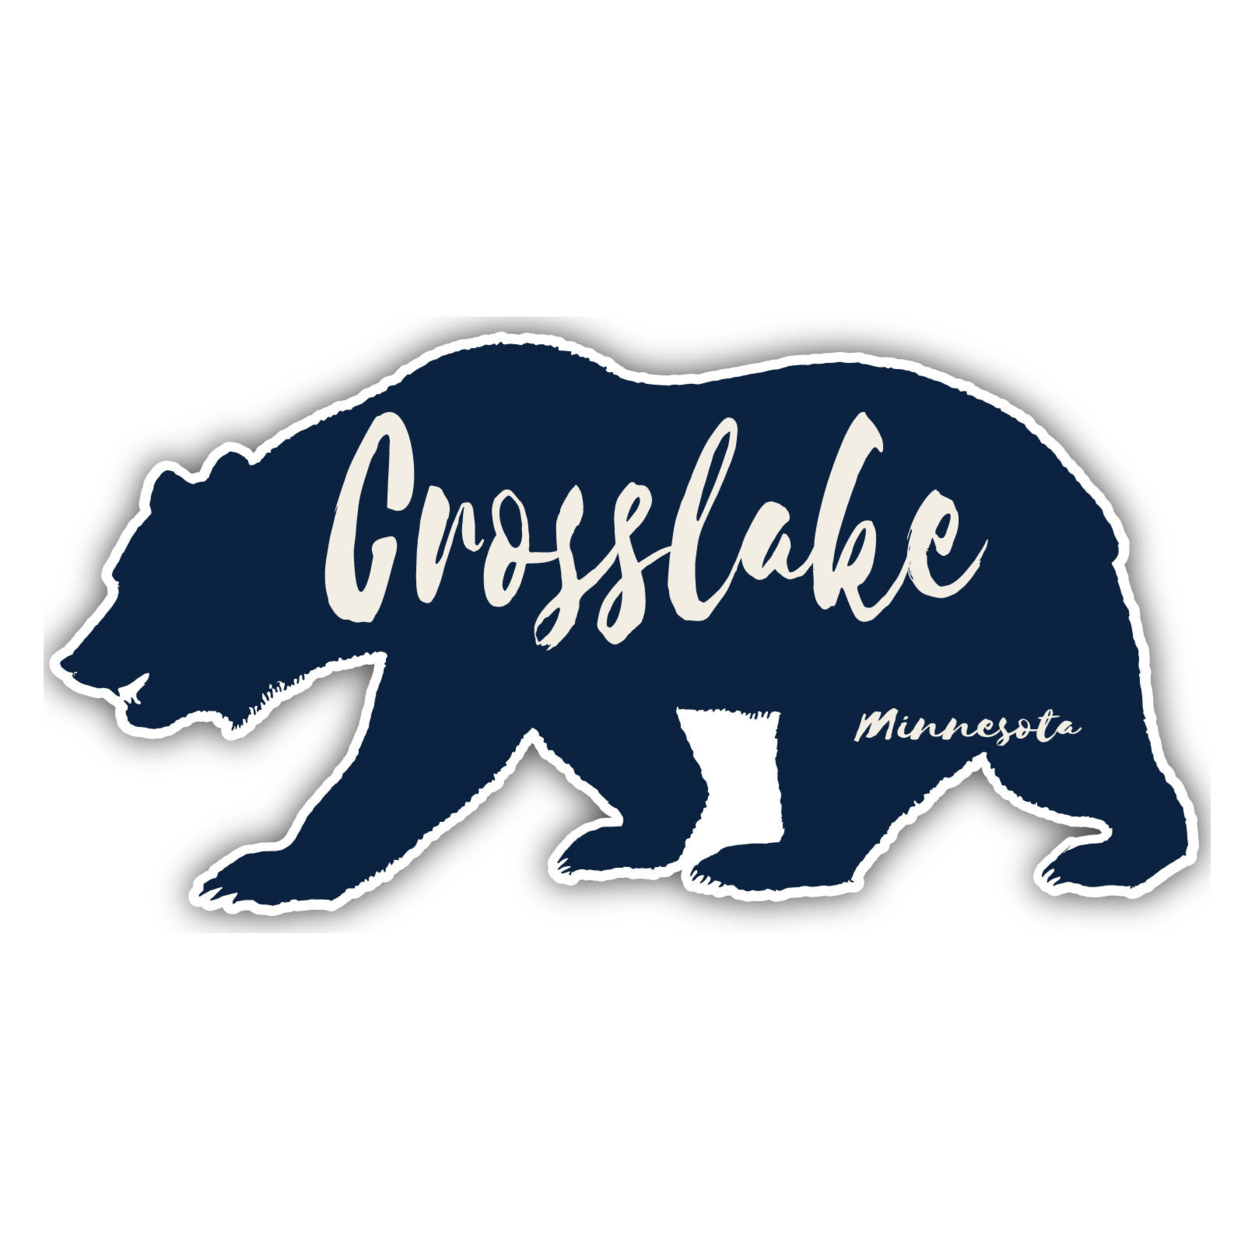 Crosslake Minnesota Souvenir Decorative Stickers (Choose Theme And Size) - 4-Pack, 2-Inch, Bear